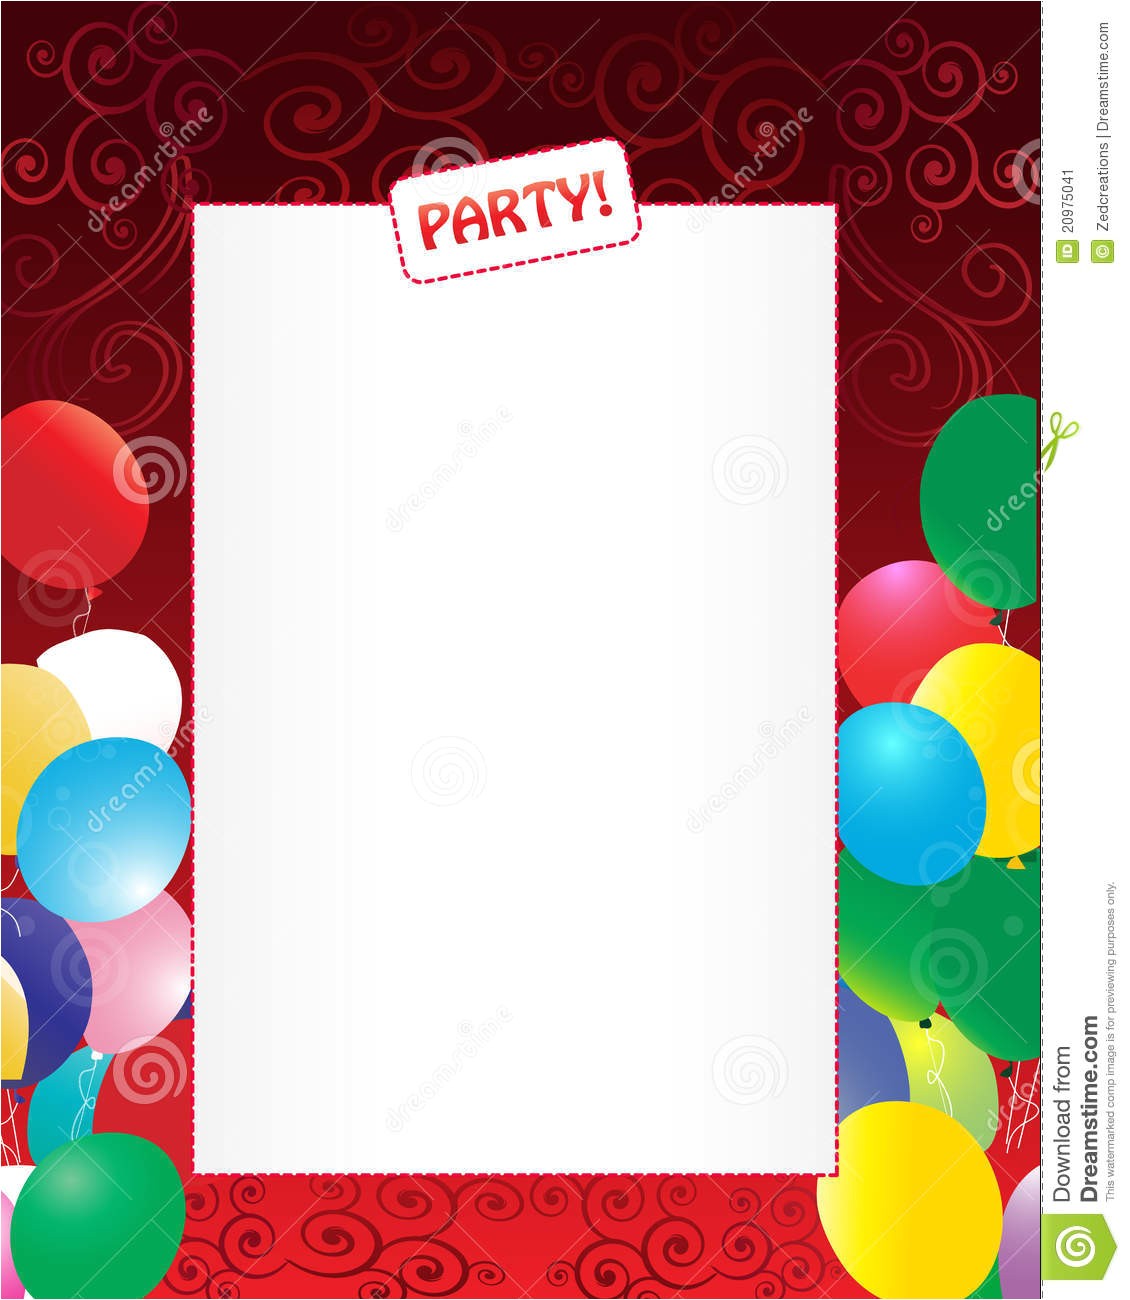 stock image party invitation background image20975041